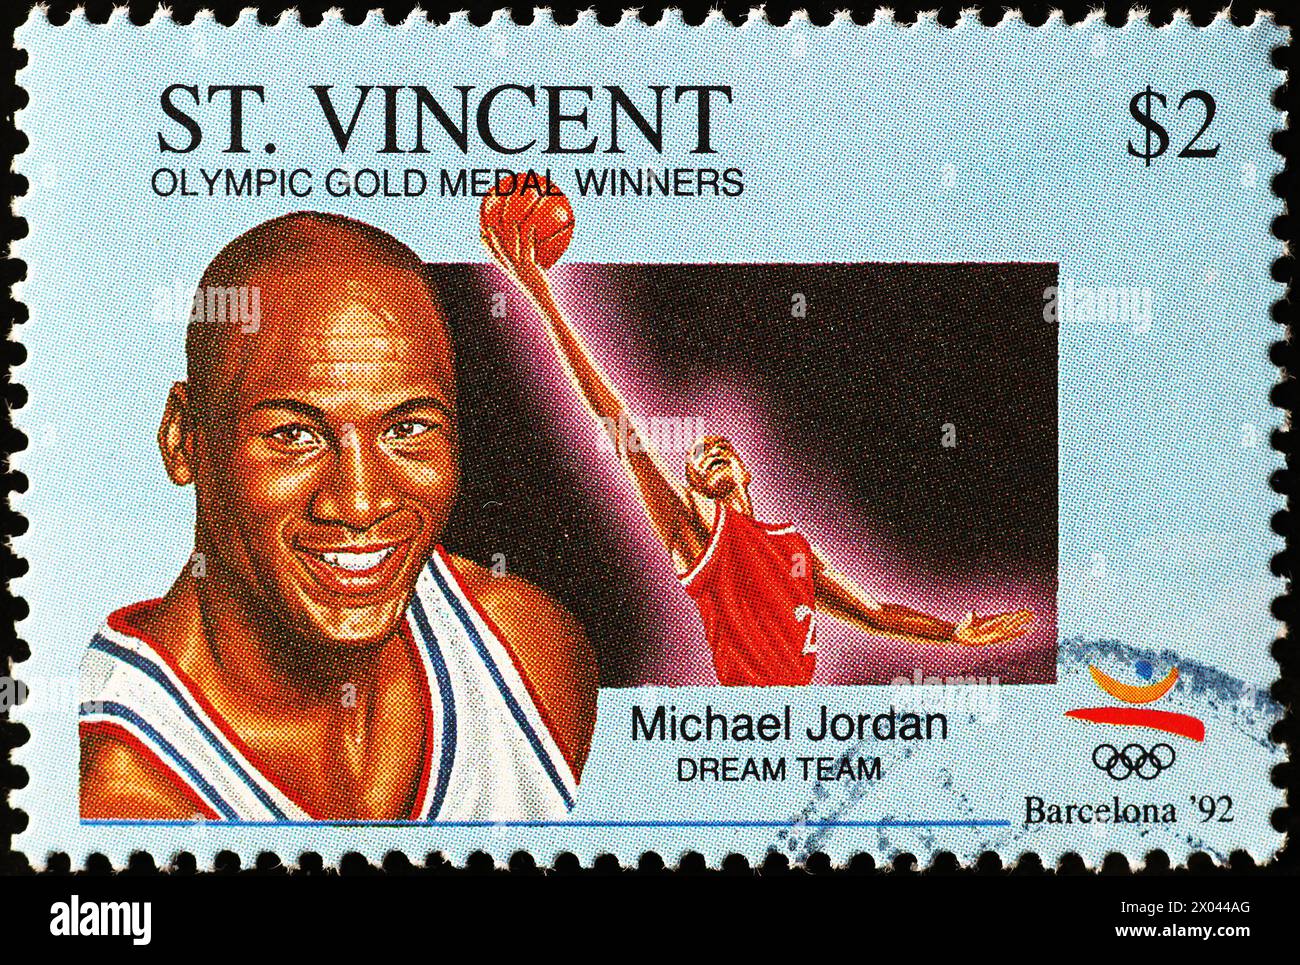 Dream team member Michael Jordan on postage stamp Stock Photo